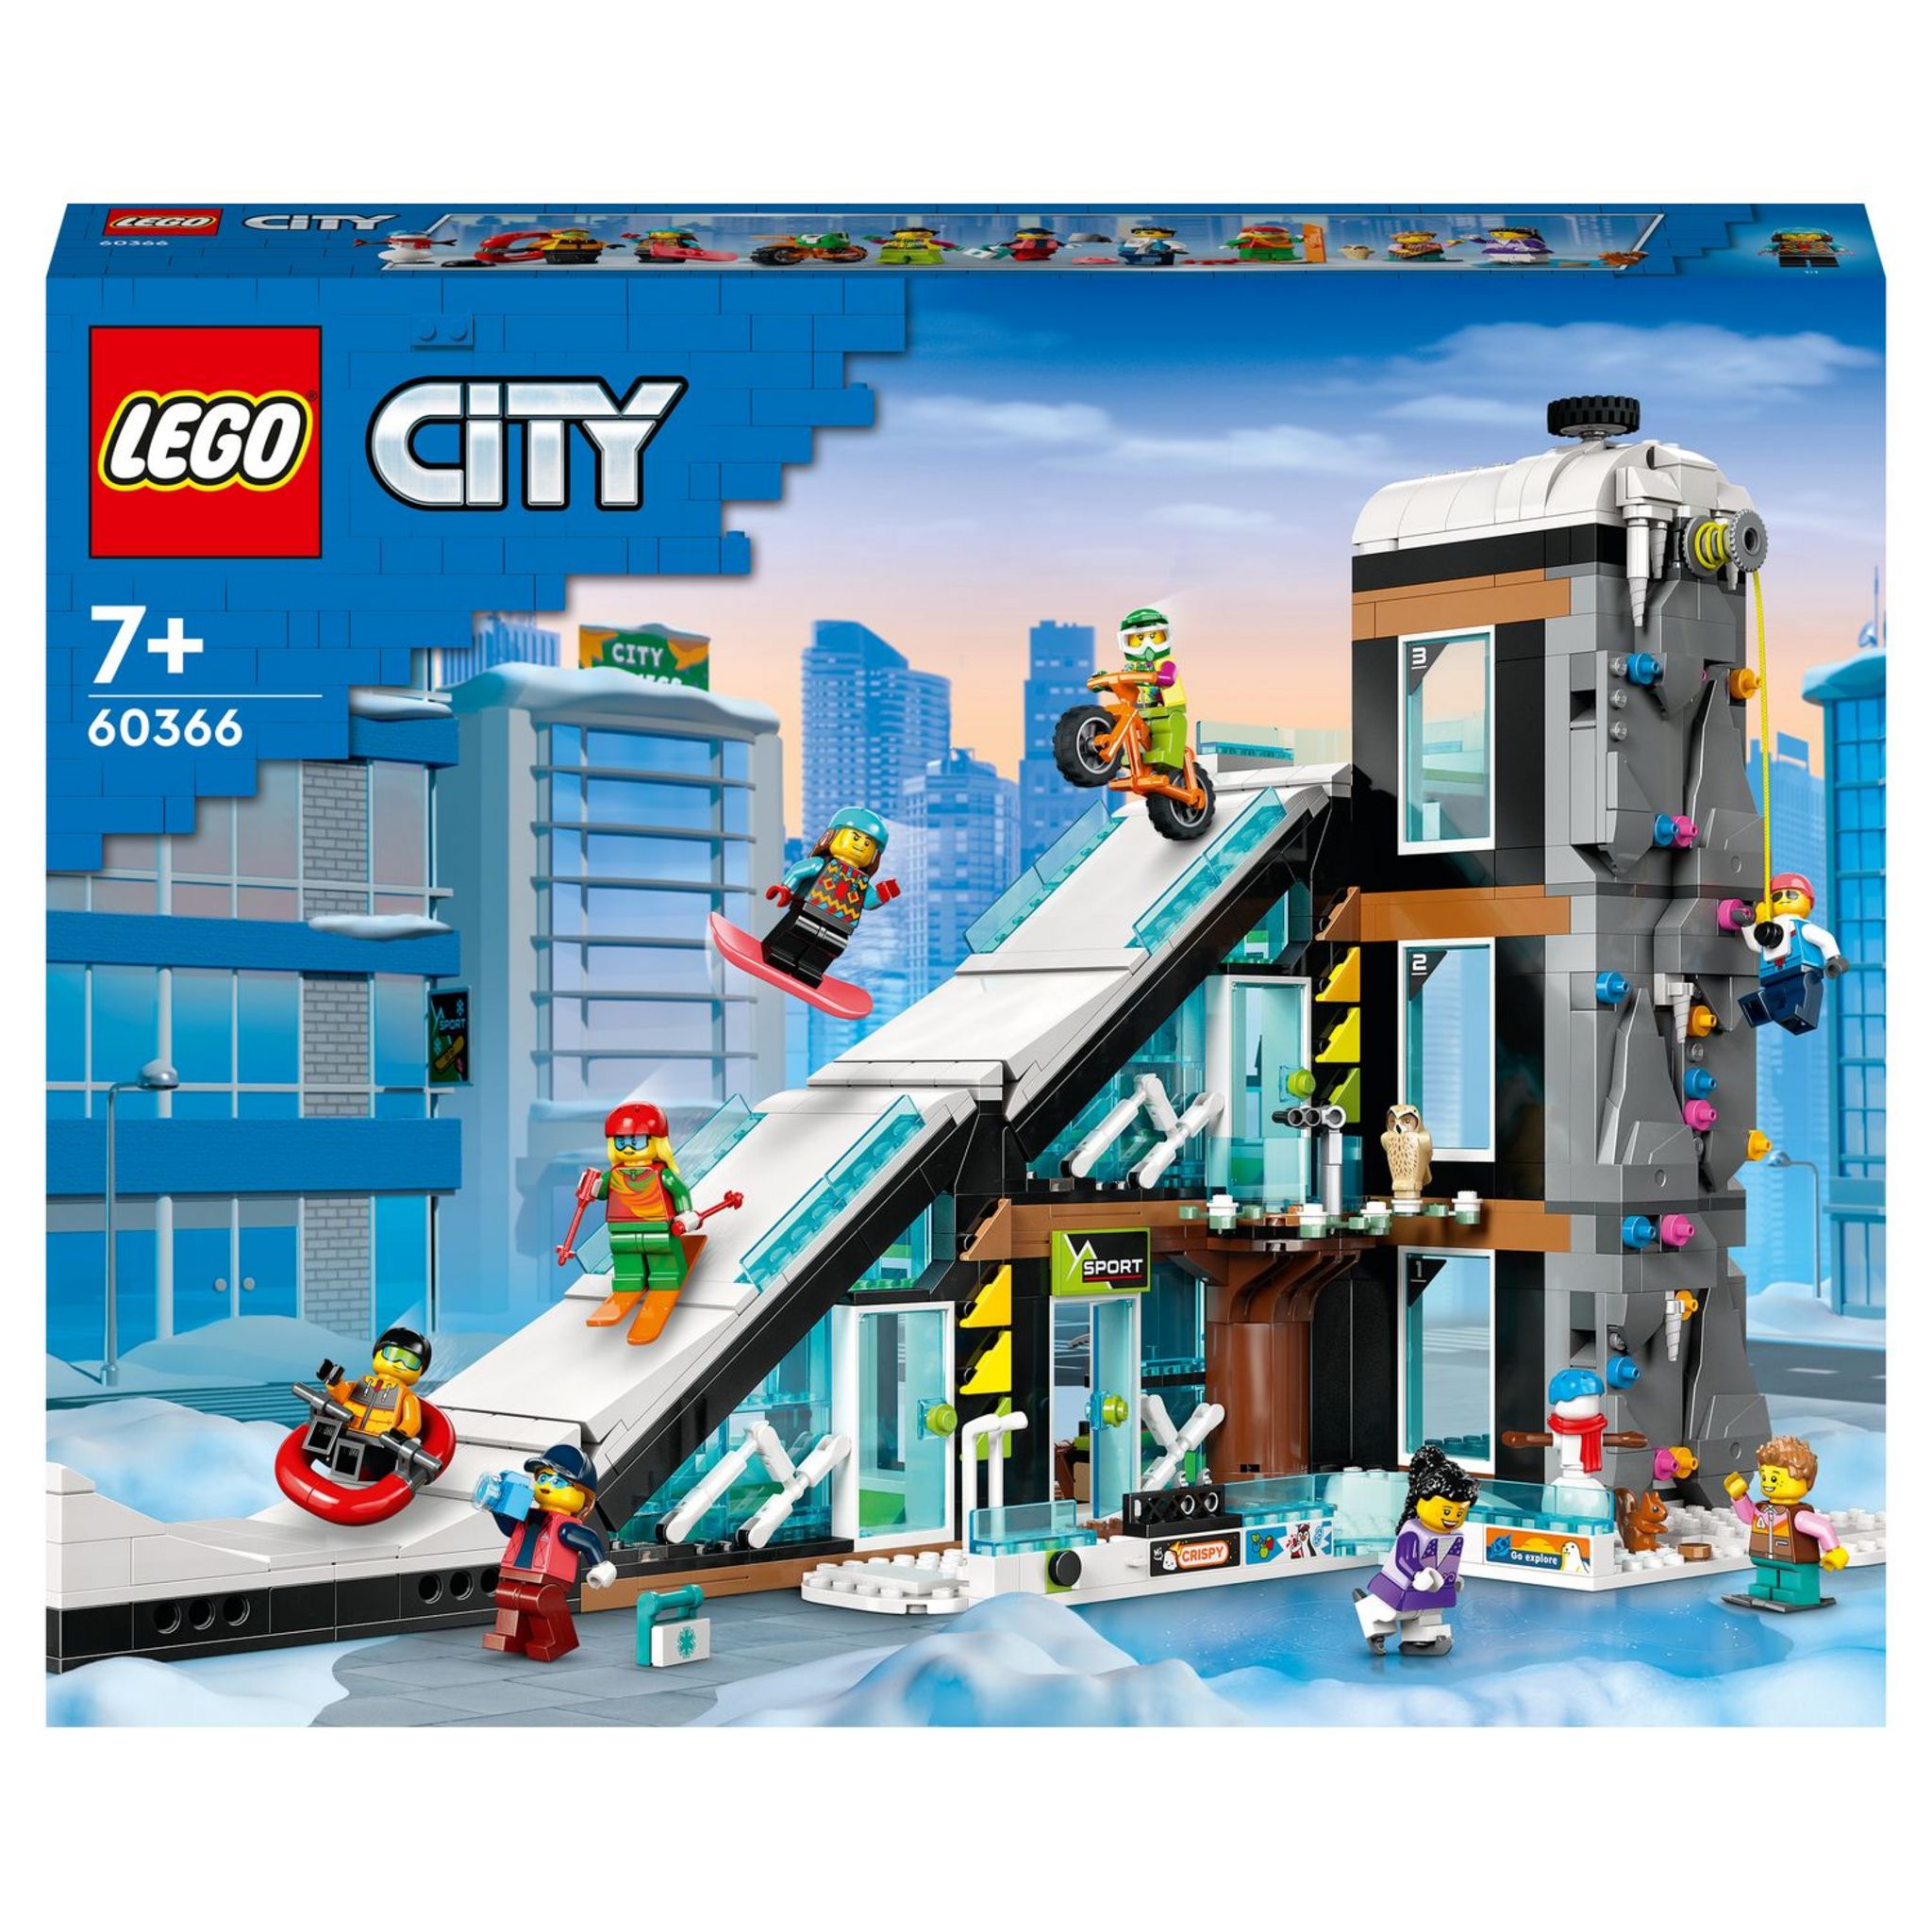 LEGO City 60366 - Le Complexe de Ski et d'Escalade, Jouet de